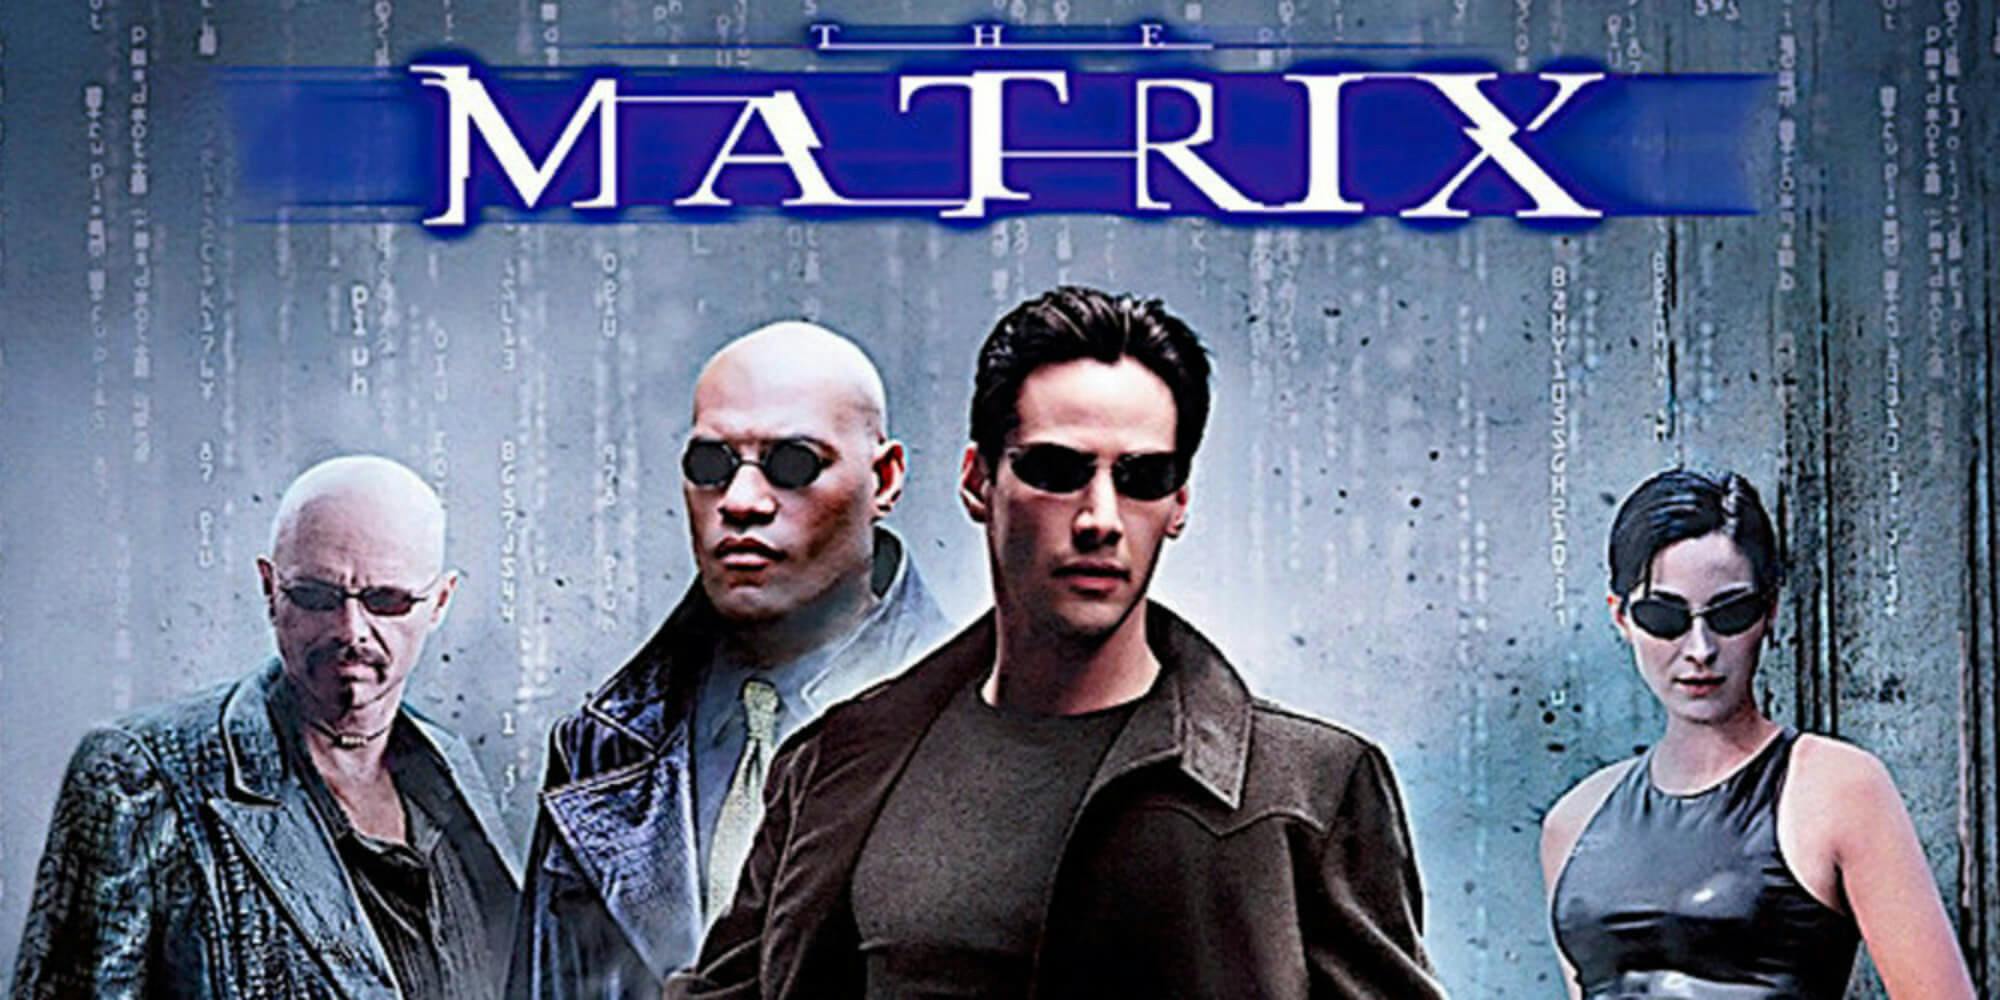 keanu reeves movies netflix the matrix